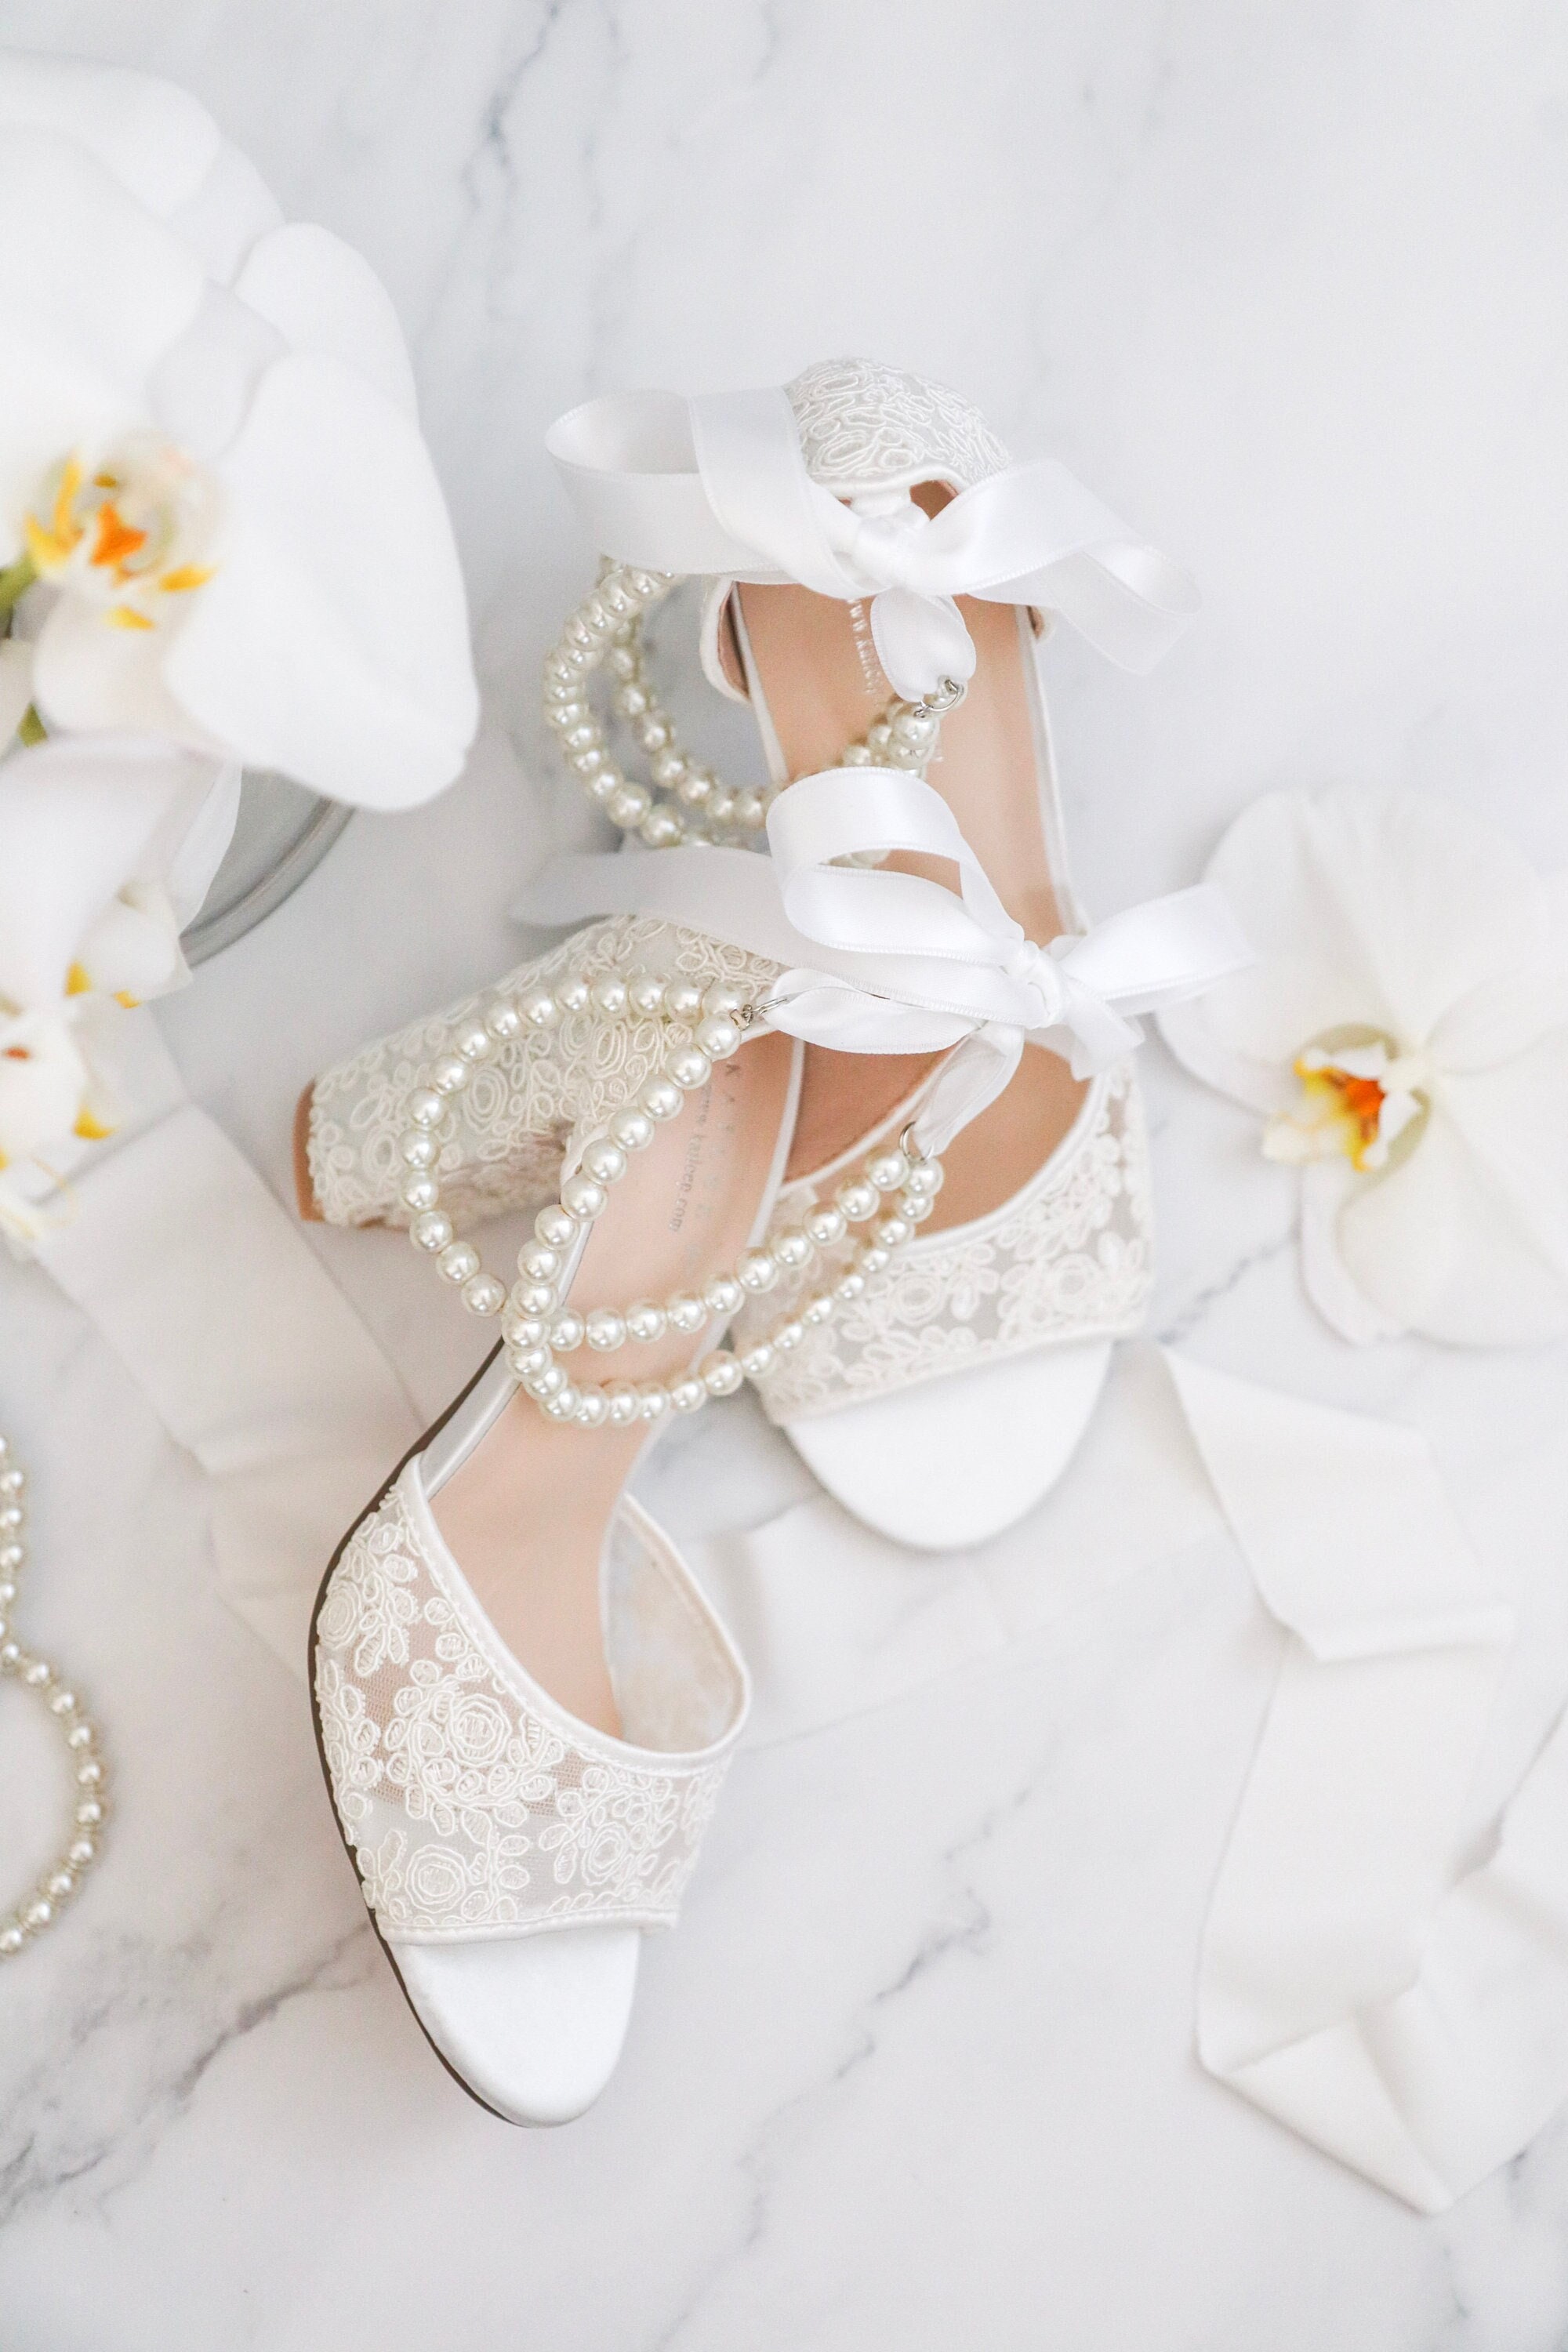 Wedding Sandals Bridal Shoes Beach Wedding Sandals Wedding Shoes for Bride  Women's Wedding Shoes White or Ivory Lace Flowers - Etsy